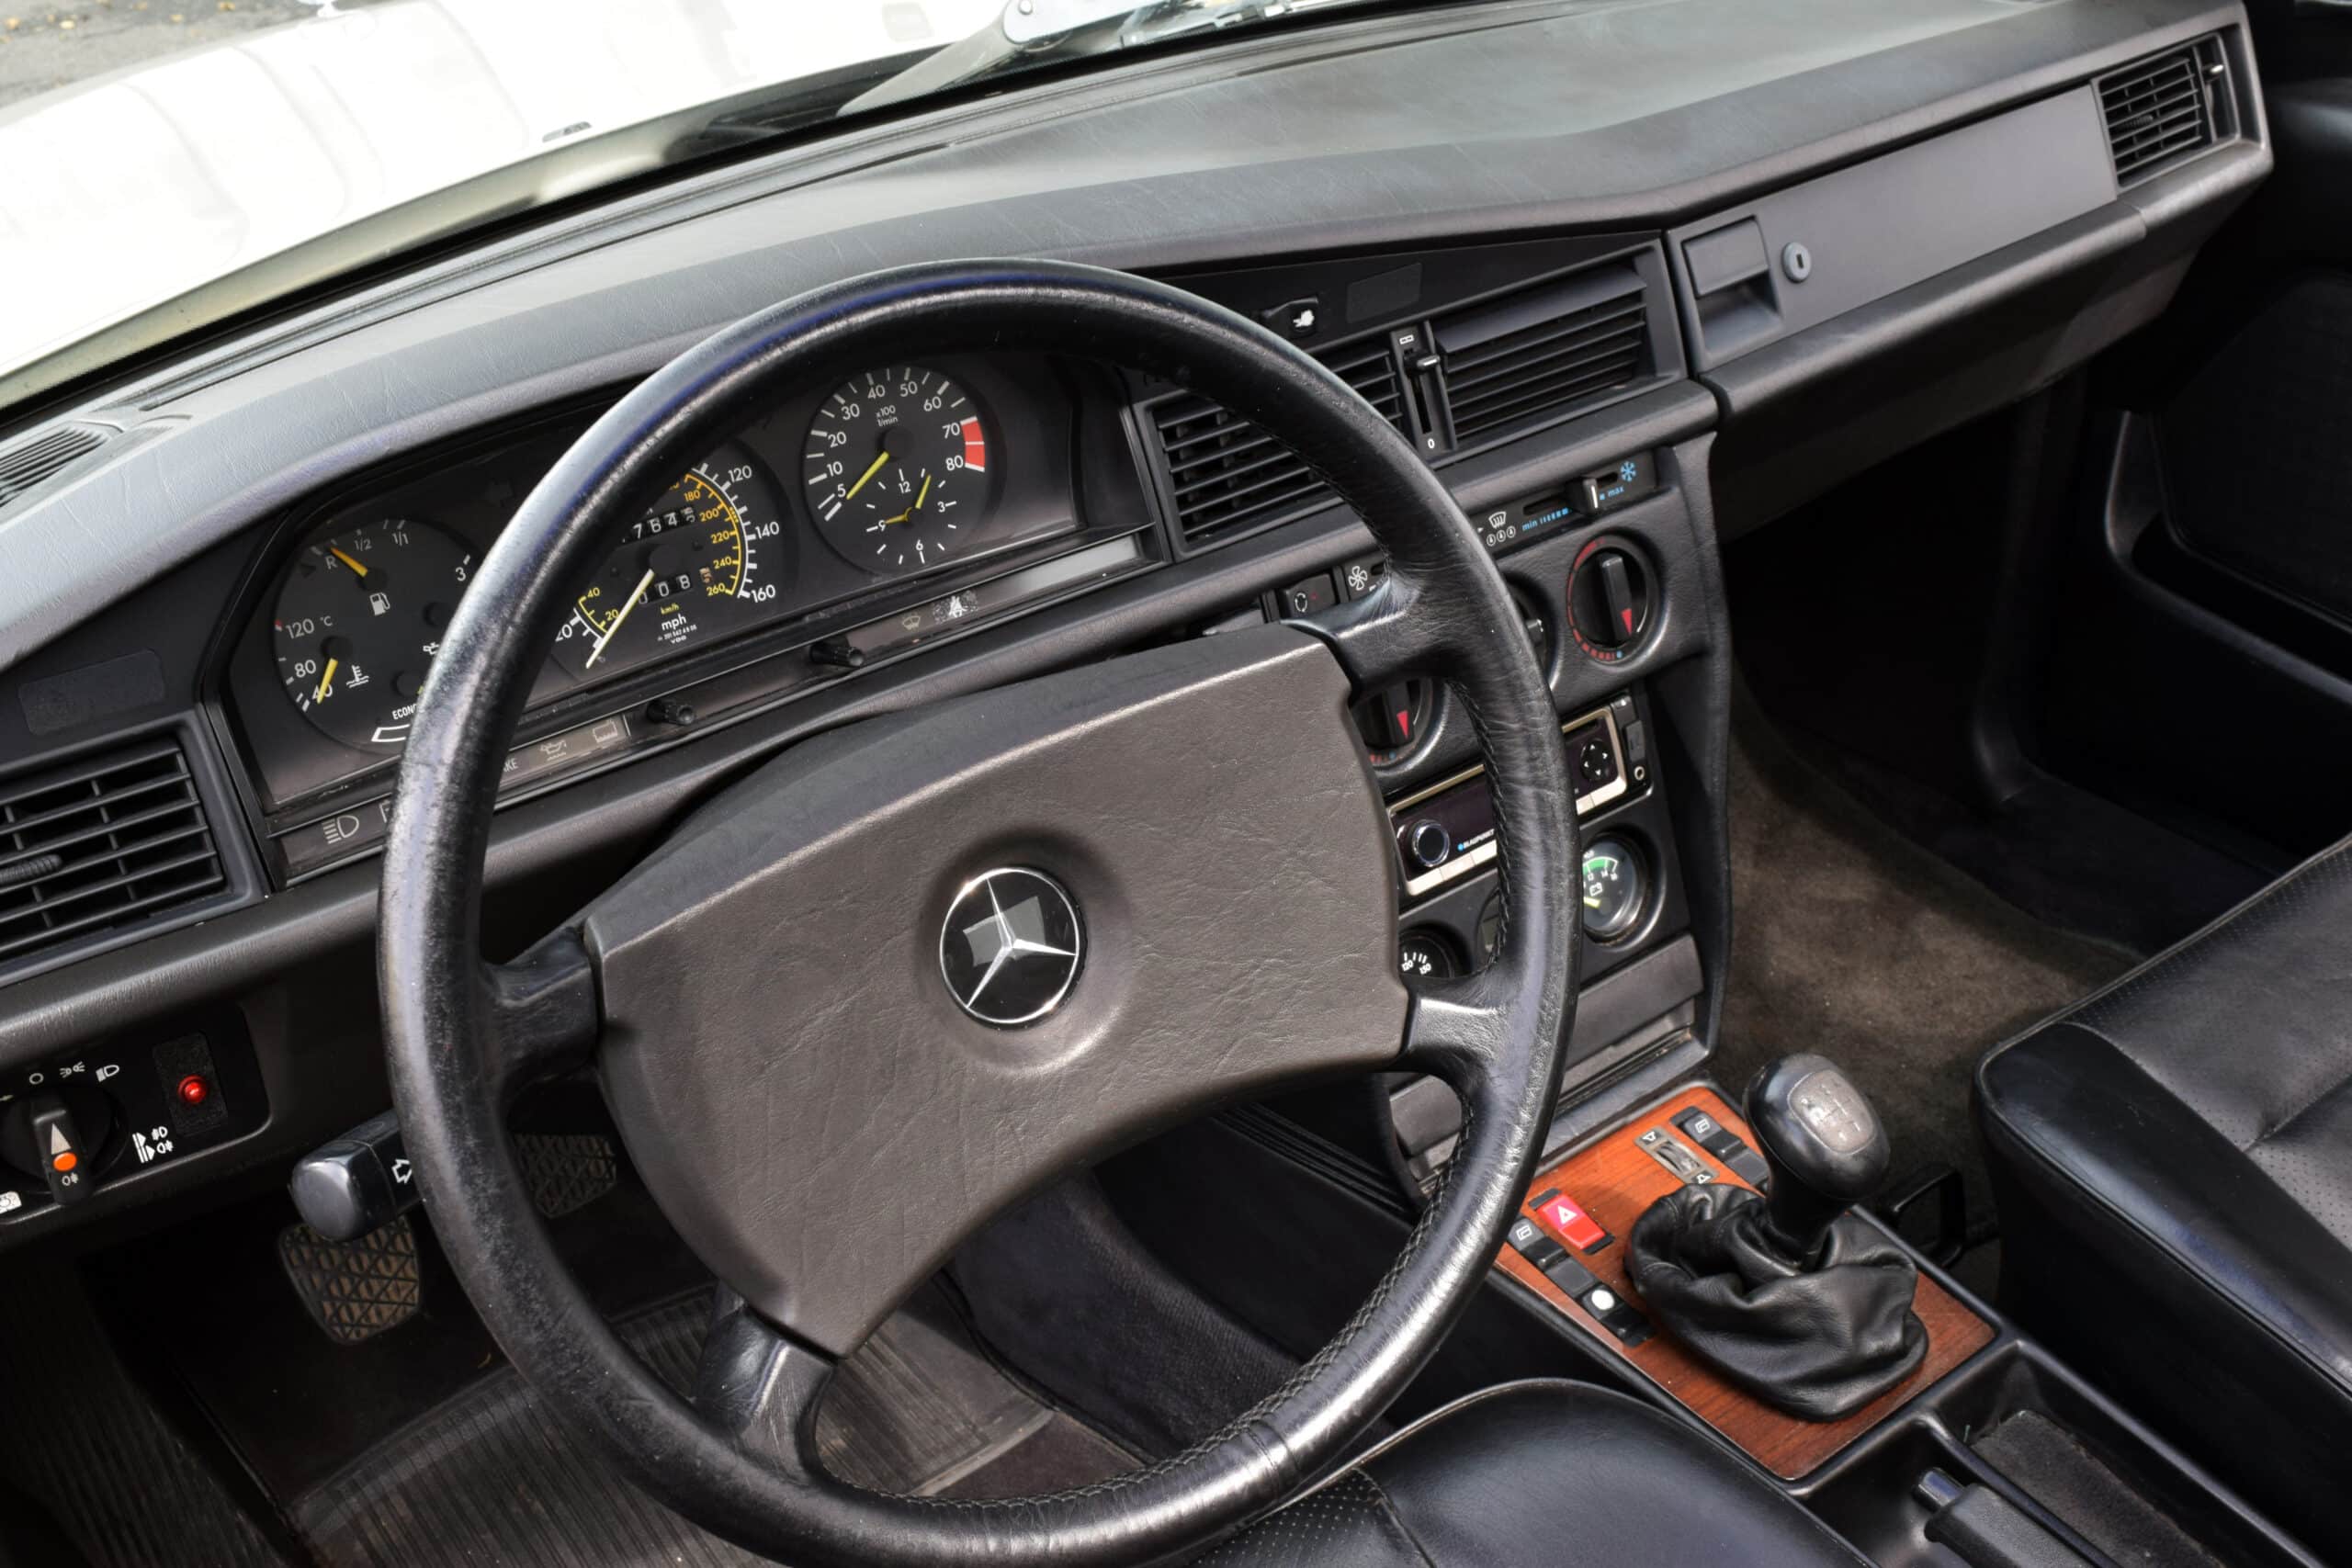 1985 Mercedes-Benz 190E Cosworth 2.3-16, EVO II WHEELS, 5-SPEED DOGLEG